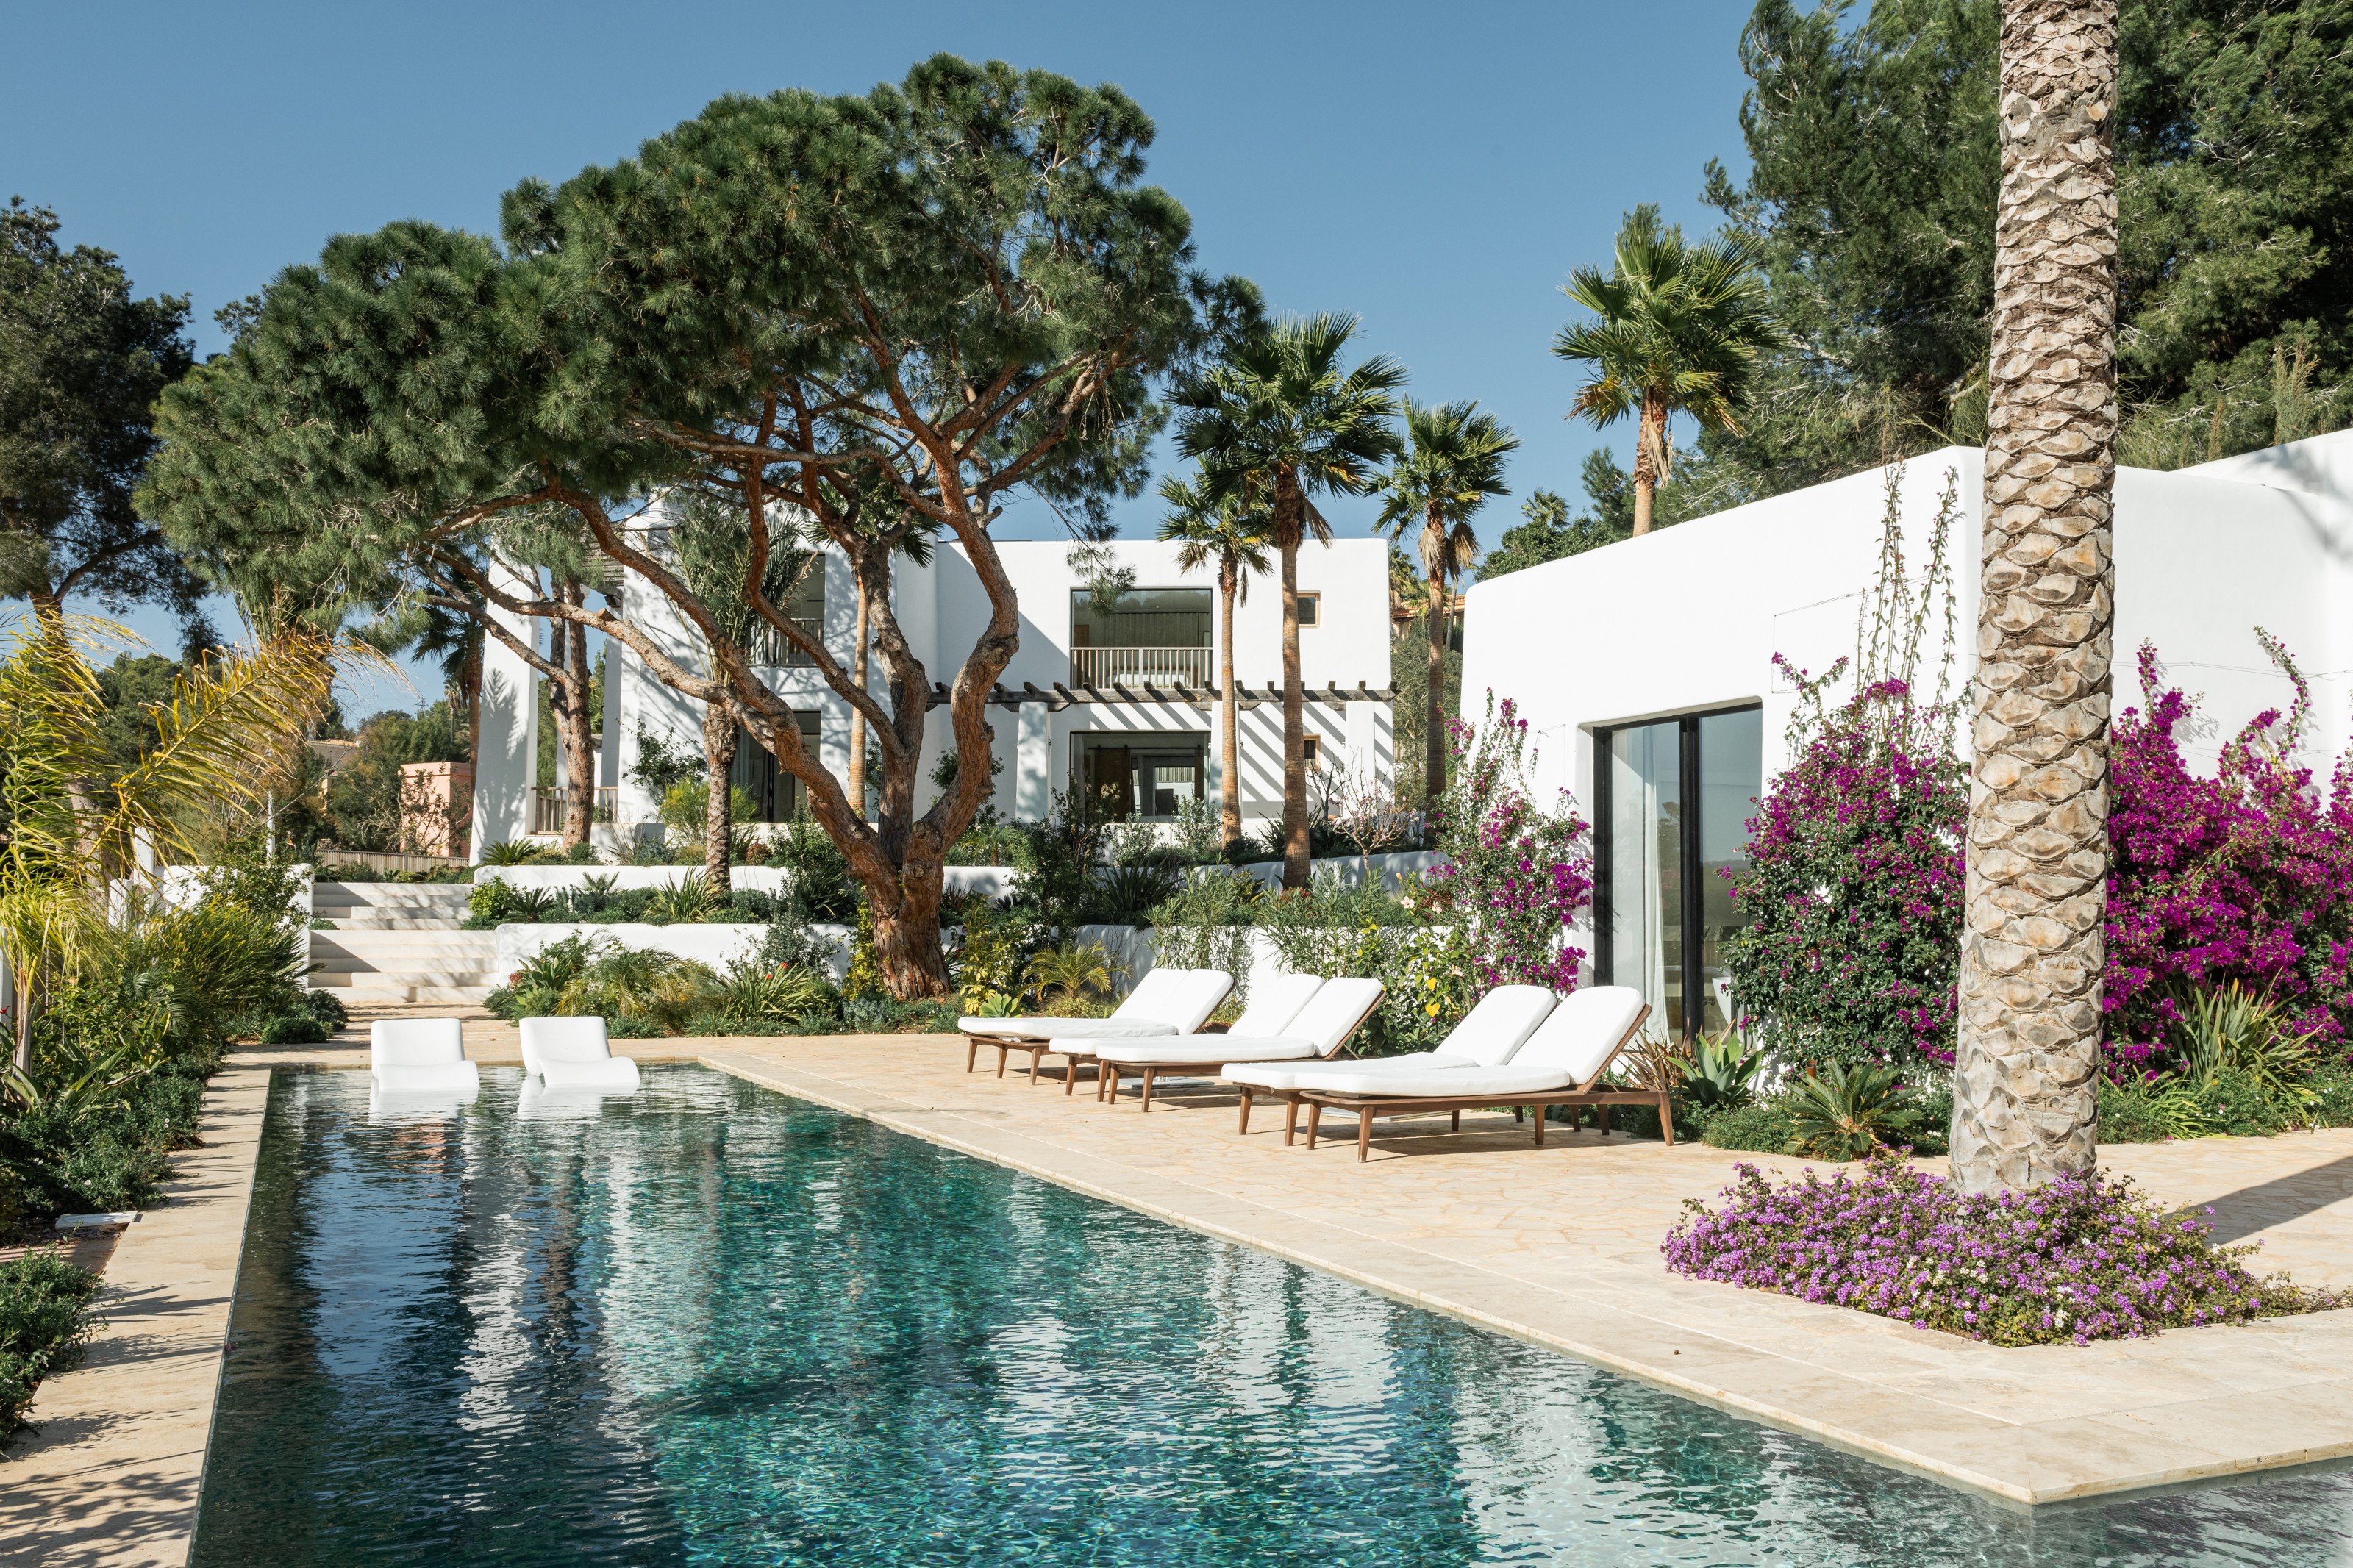 Imposante Villa Blakstad in unmittelbarer Nähe zu Ibiza-Stadt